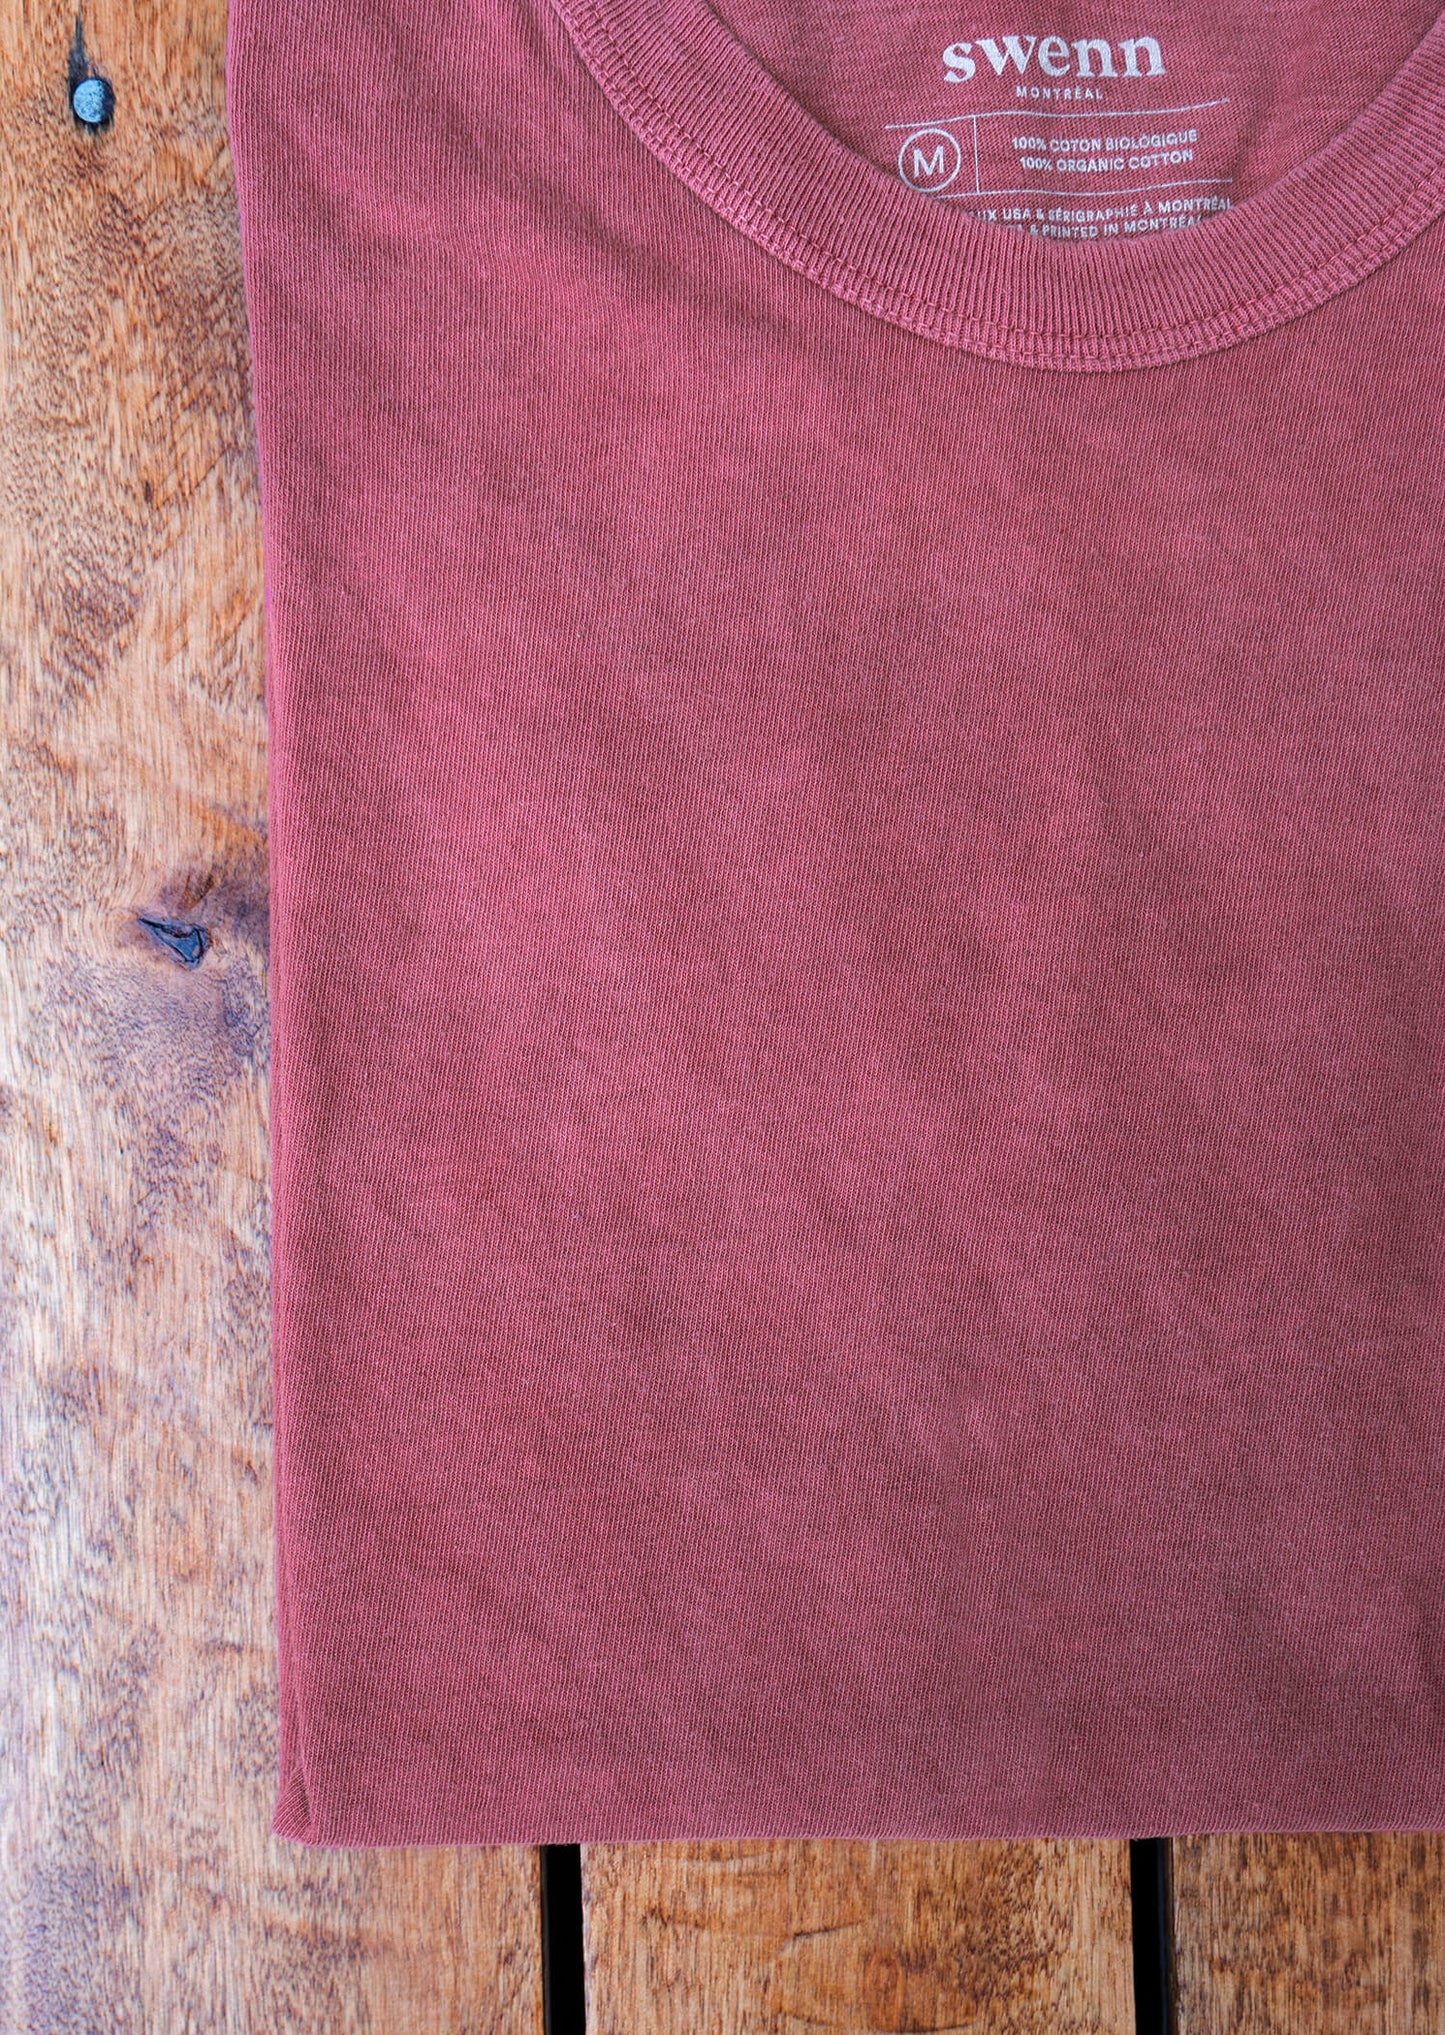 Sunwashed t-shirt - organic cotton - purple red